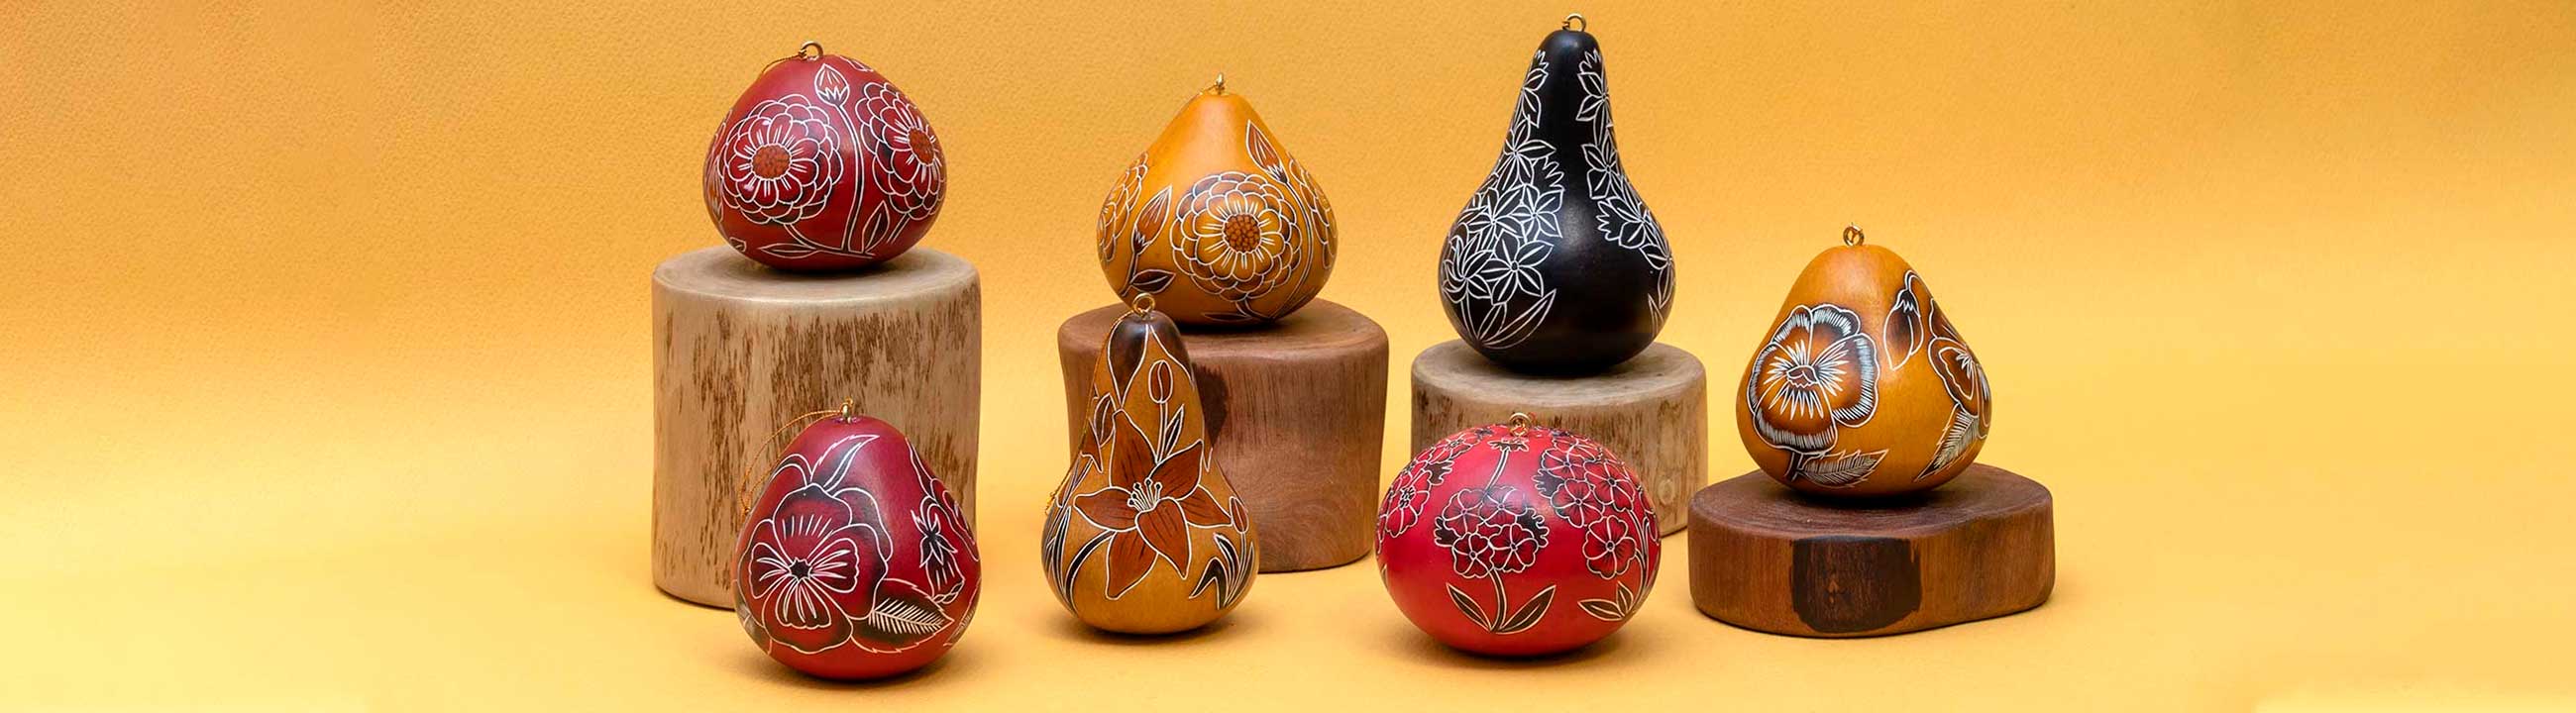 gourd ornament sets